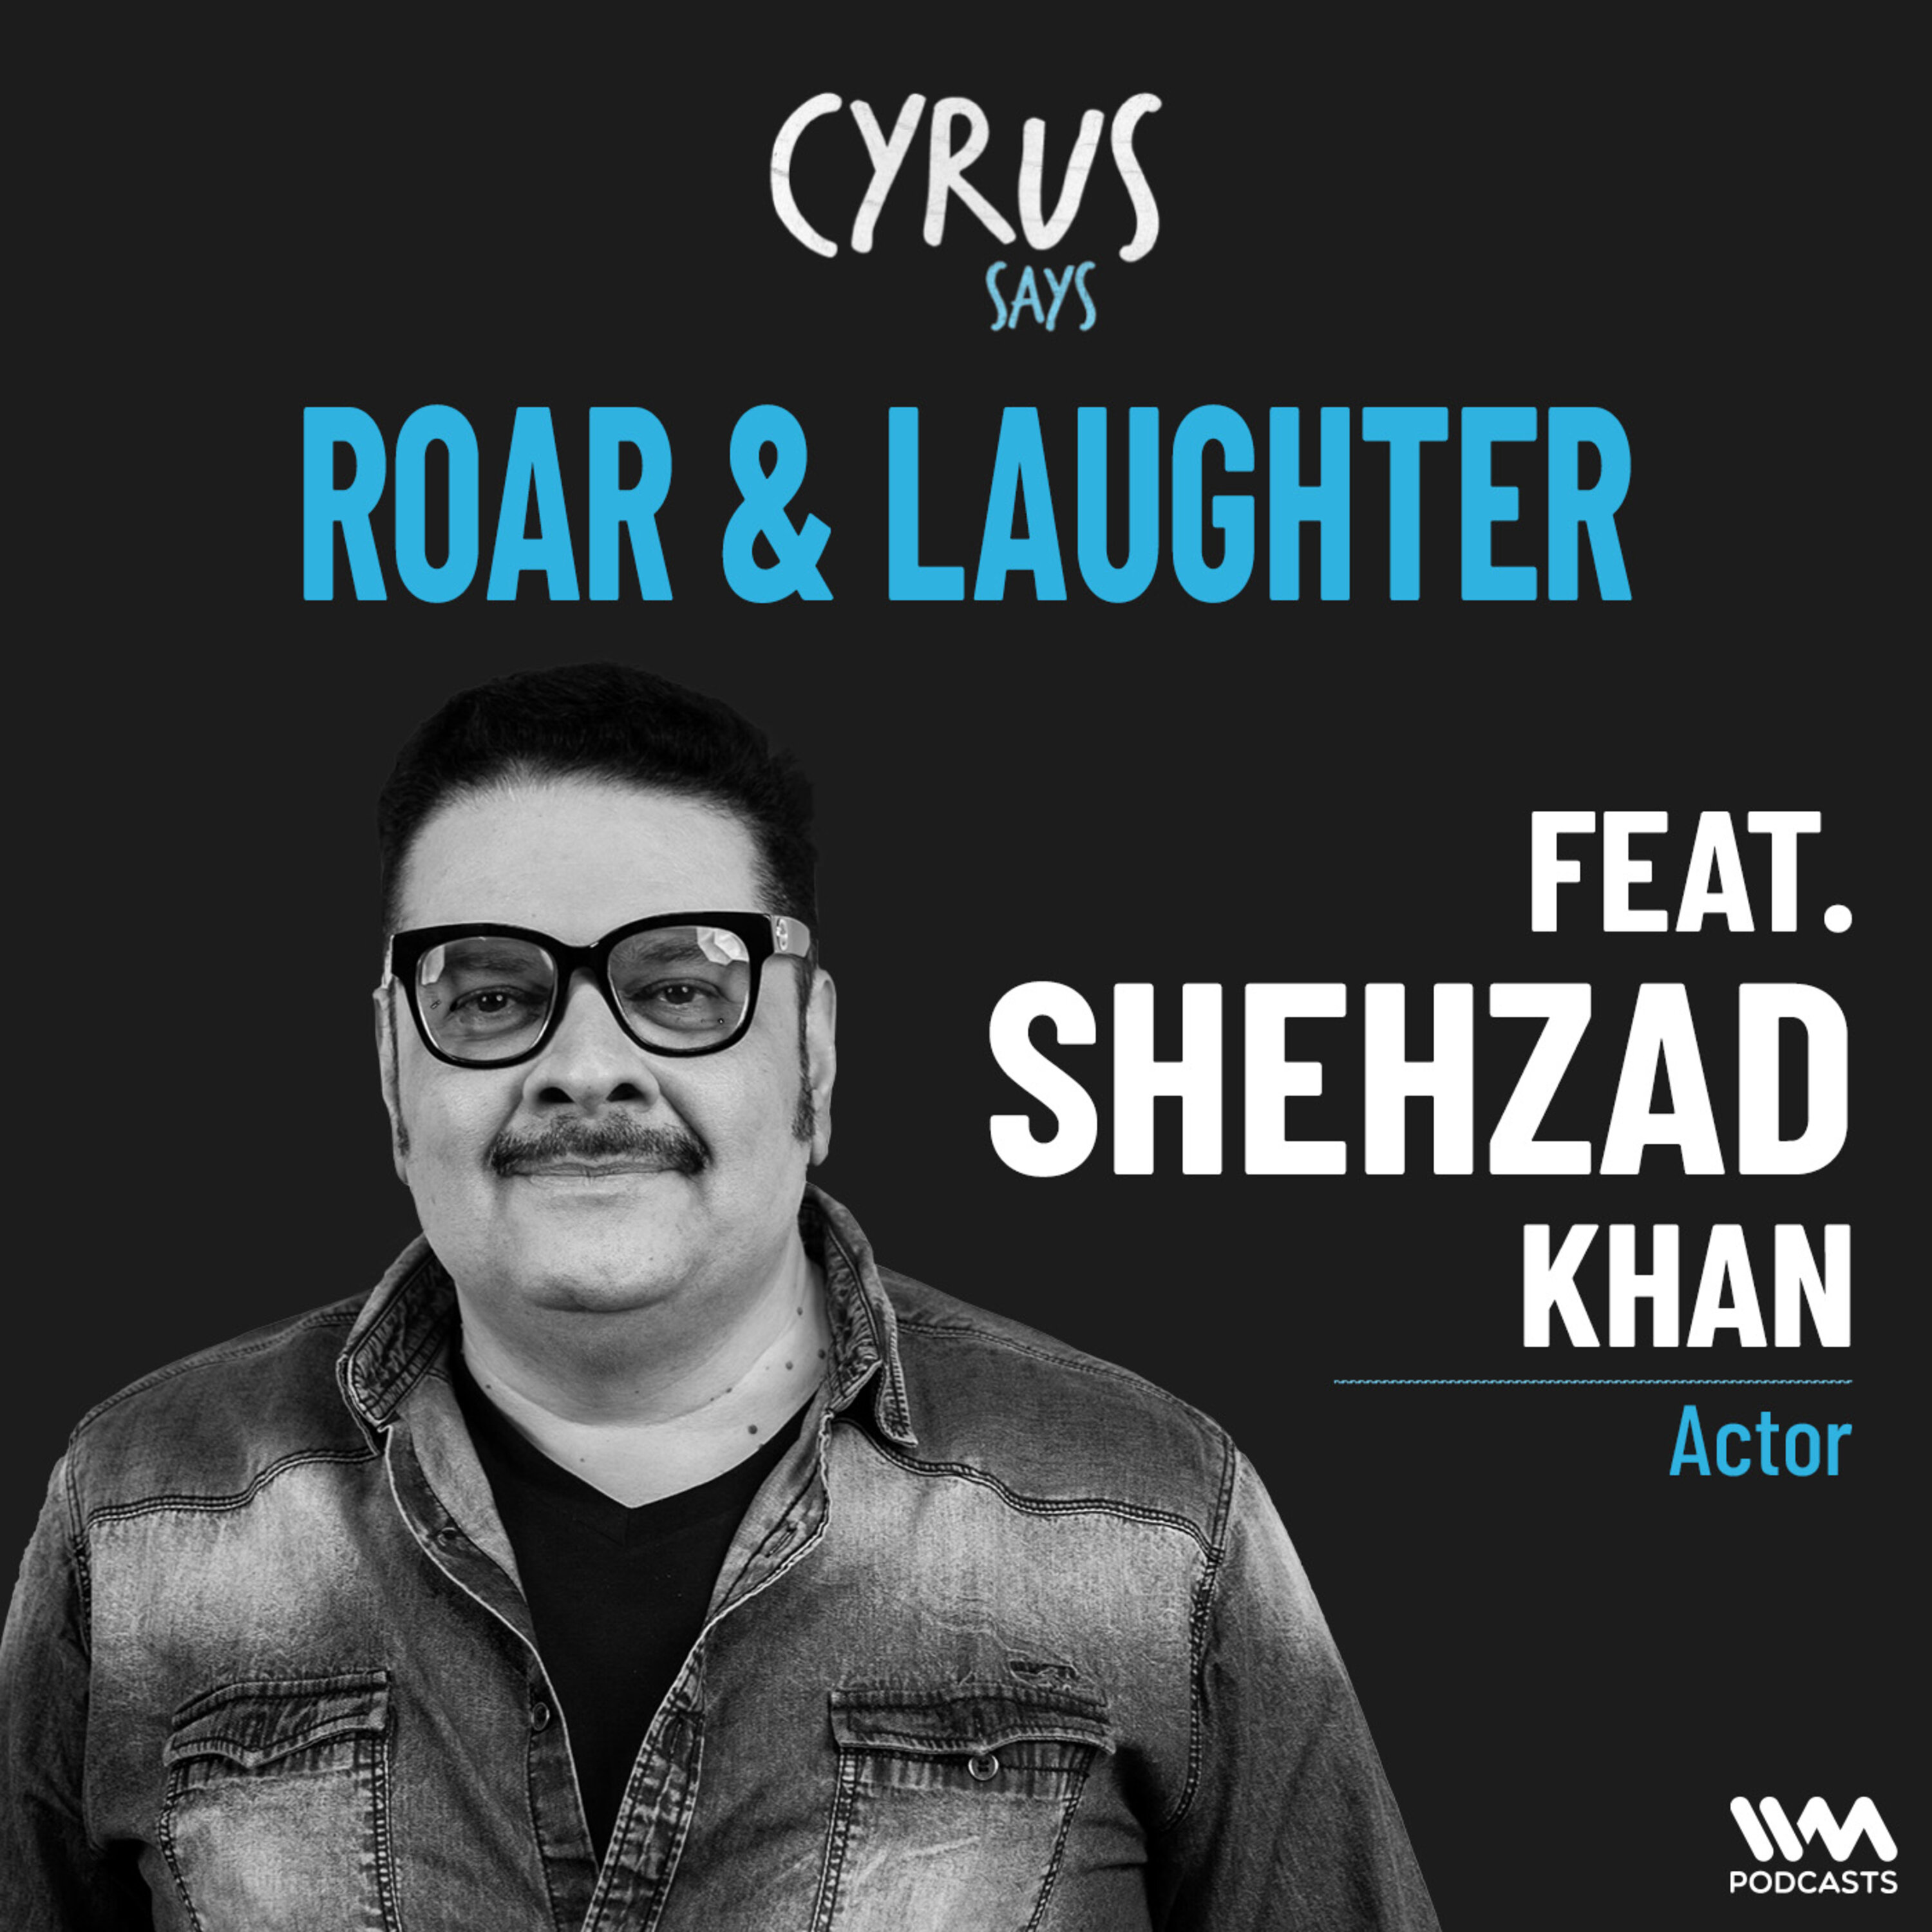 Roar & Laughter, Shehzad Khan